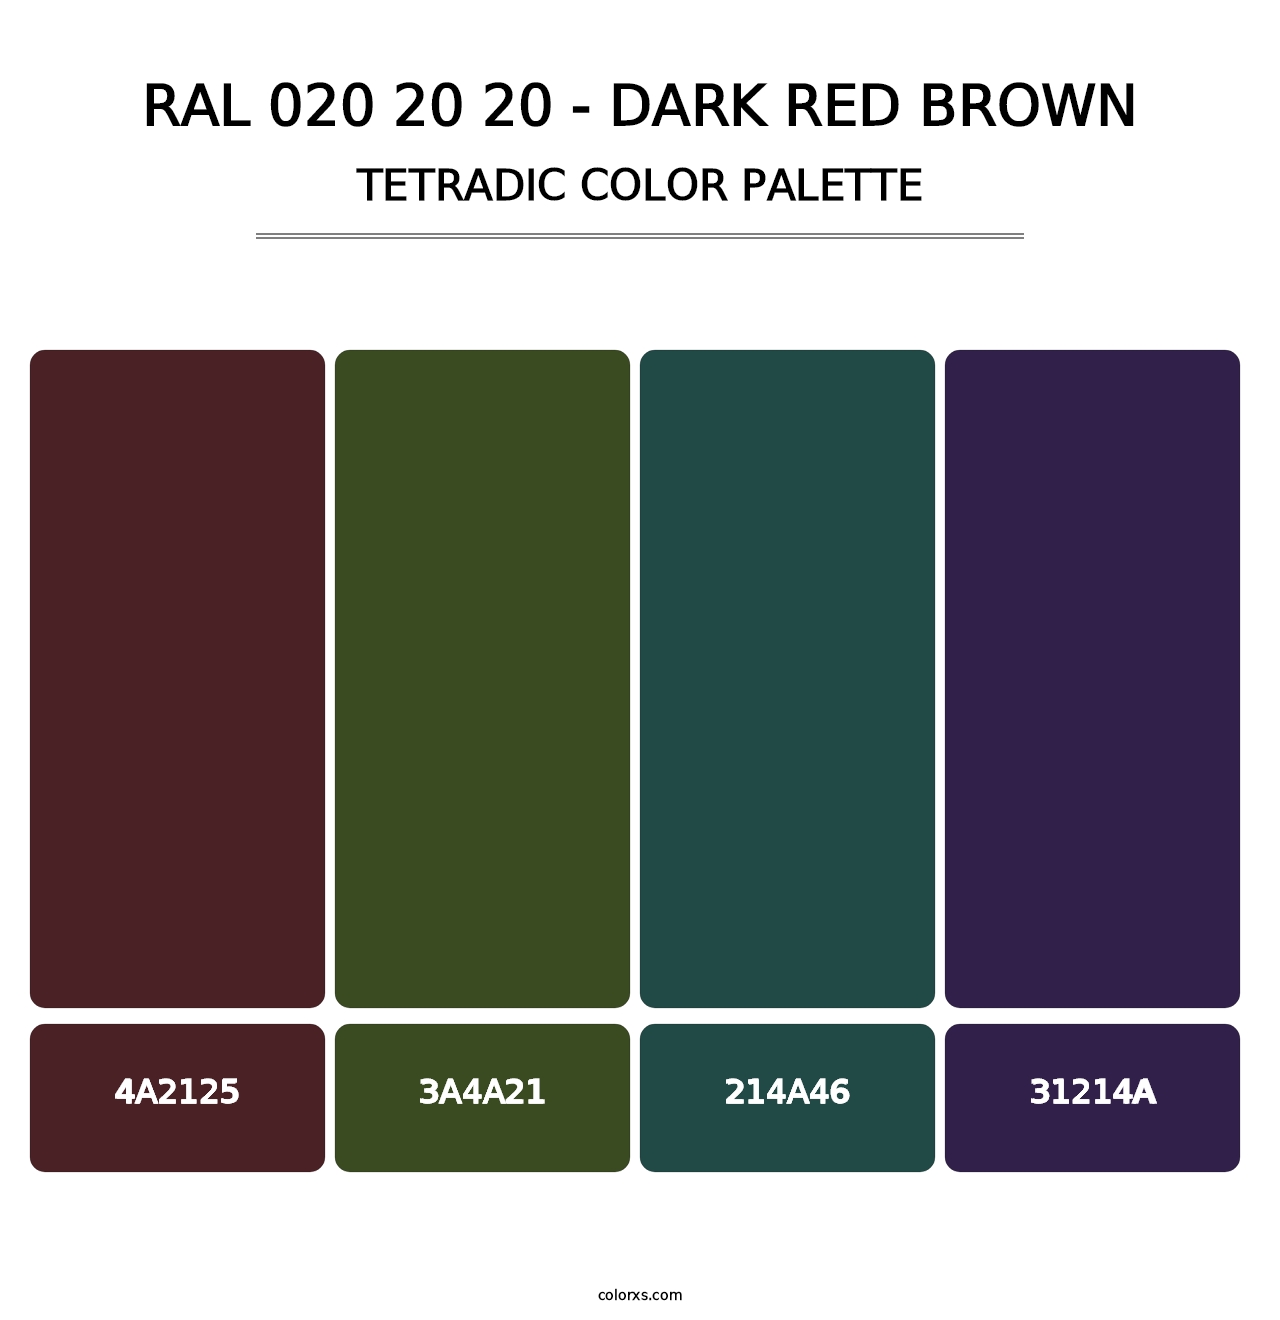 RAL 020 20 20 - Dark Red Brown - Tetradic Color Palette